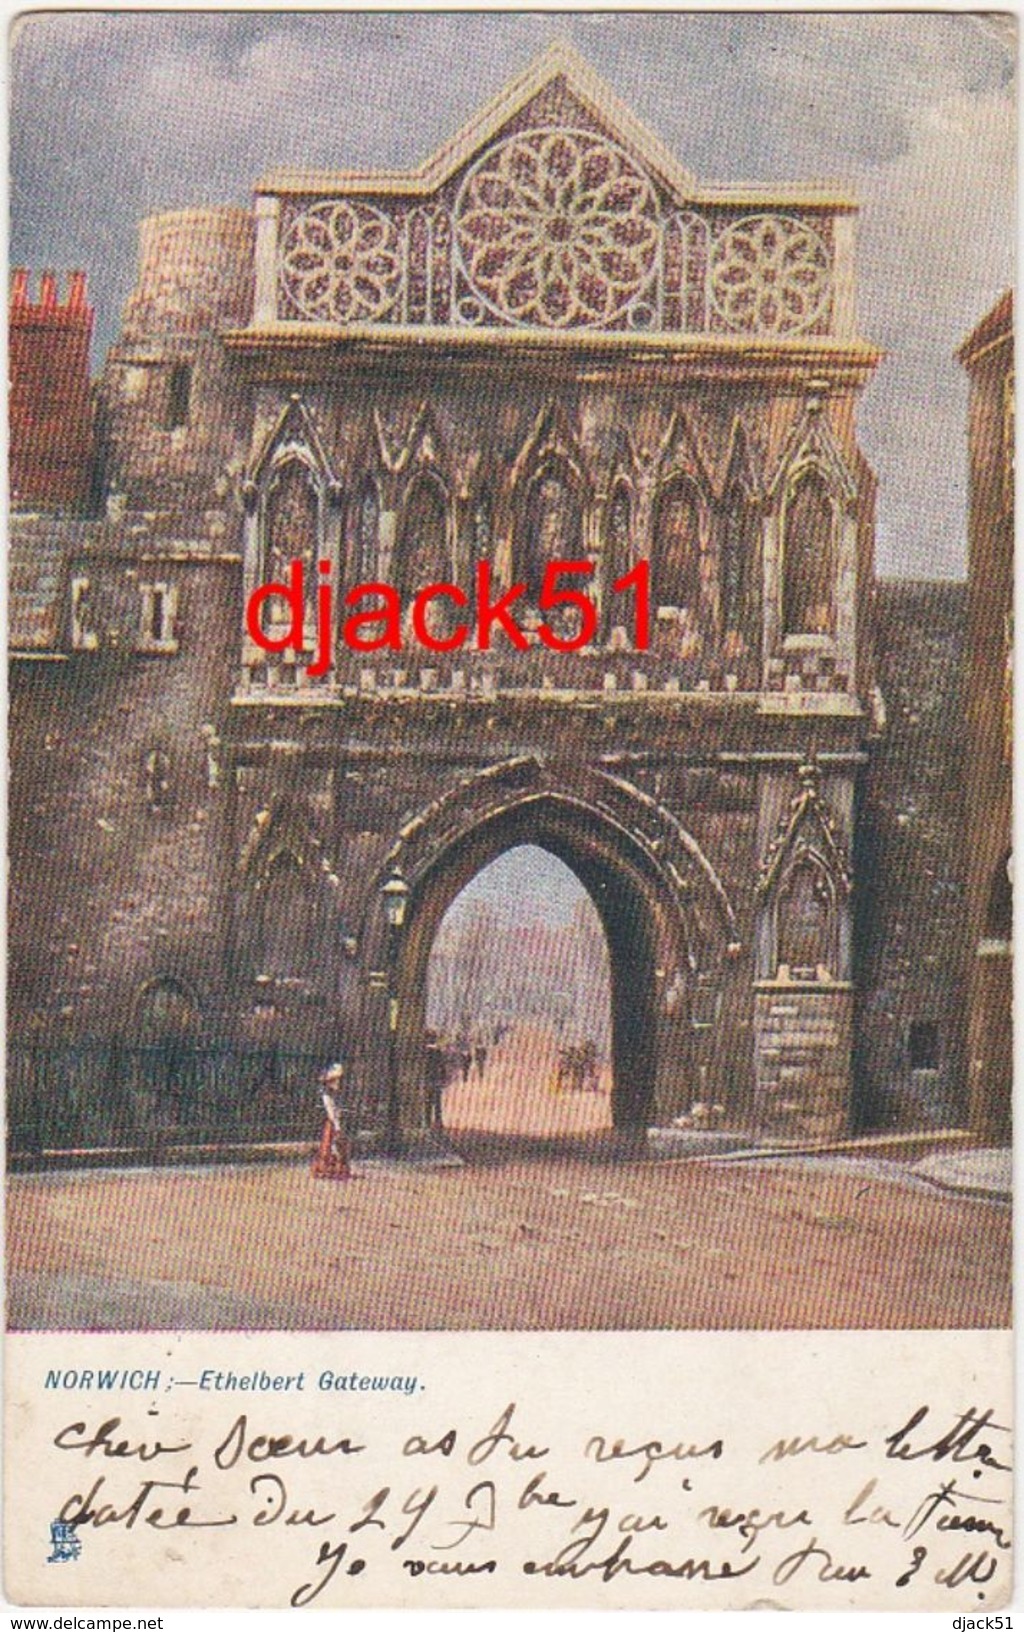 ROYAUME-UNI - NORWICH - Ethelbert Gateway - 1904 - Norwich